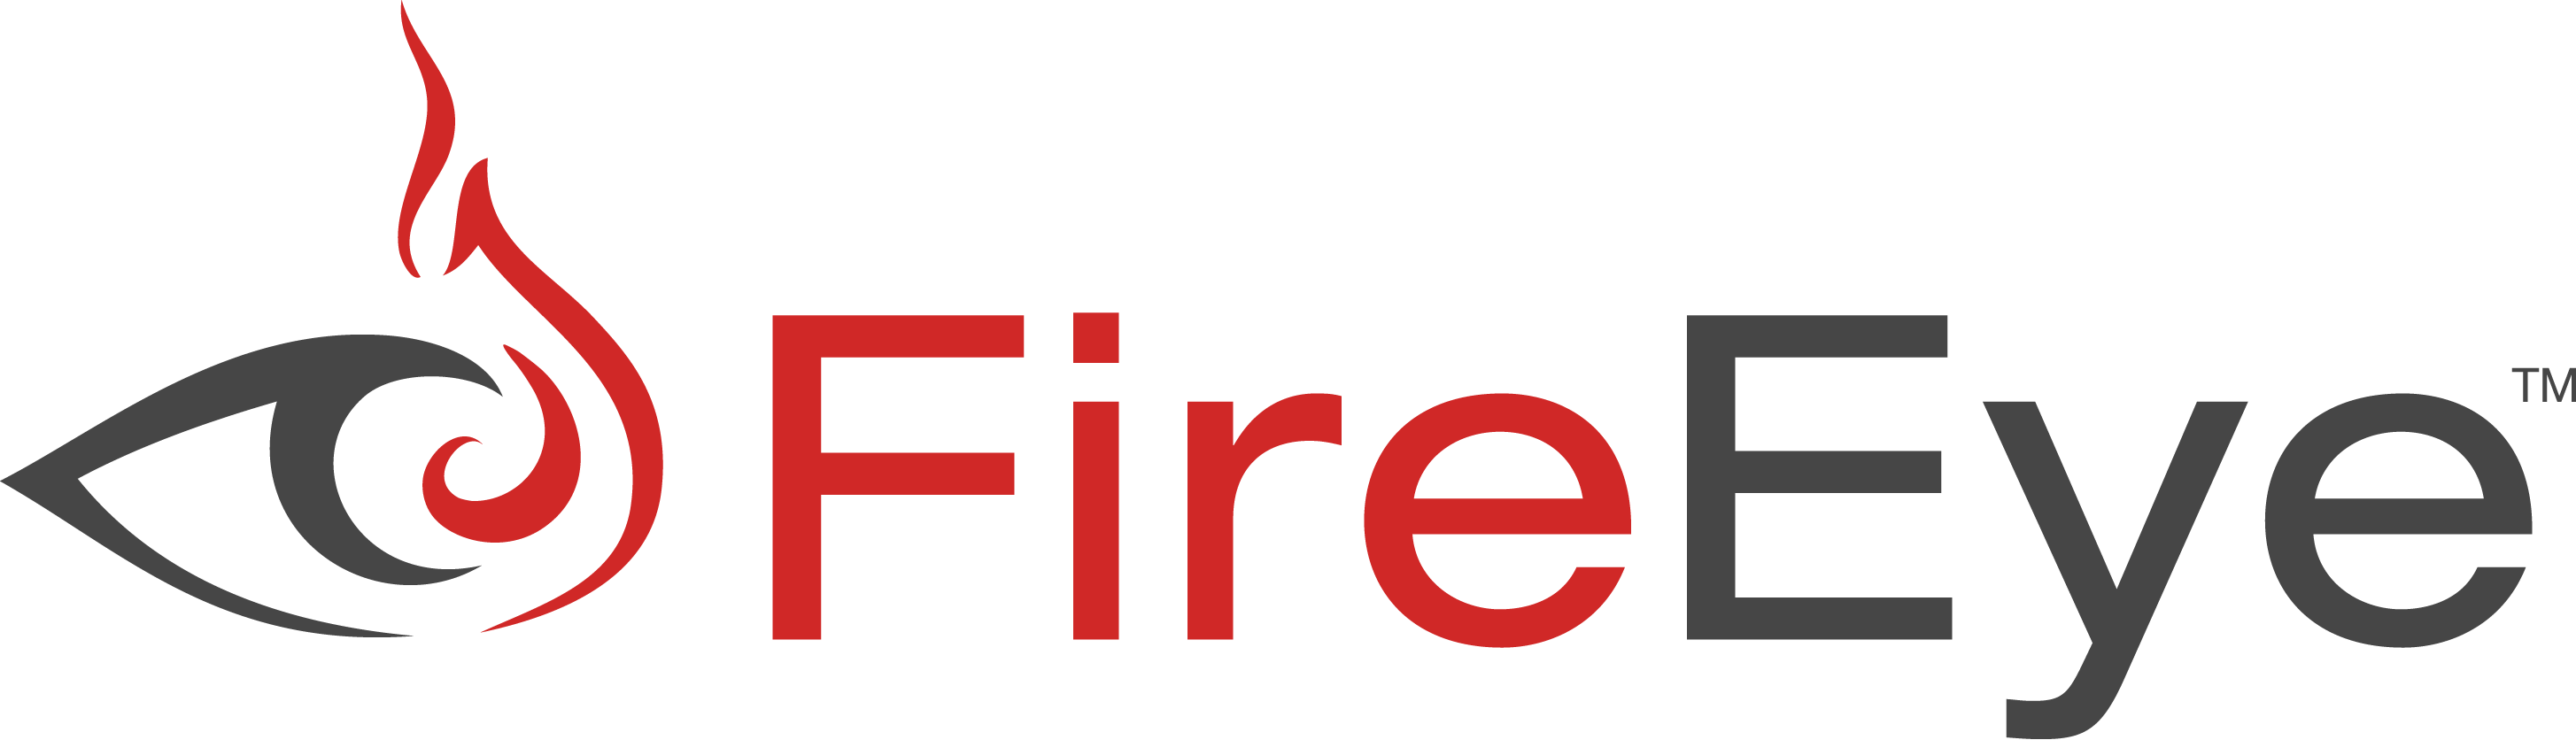 FEYE stock logo